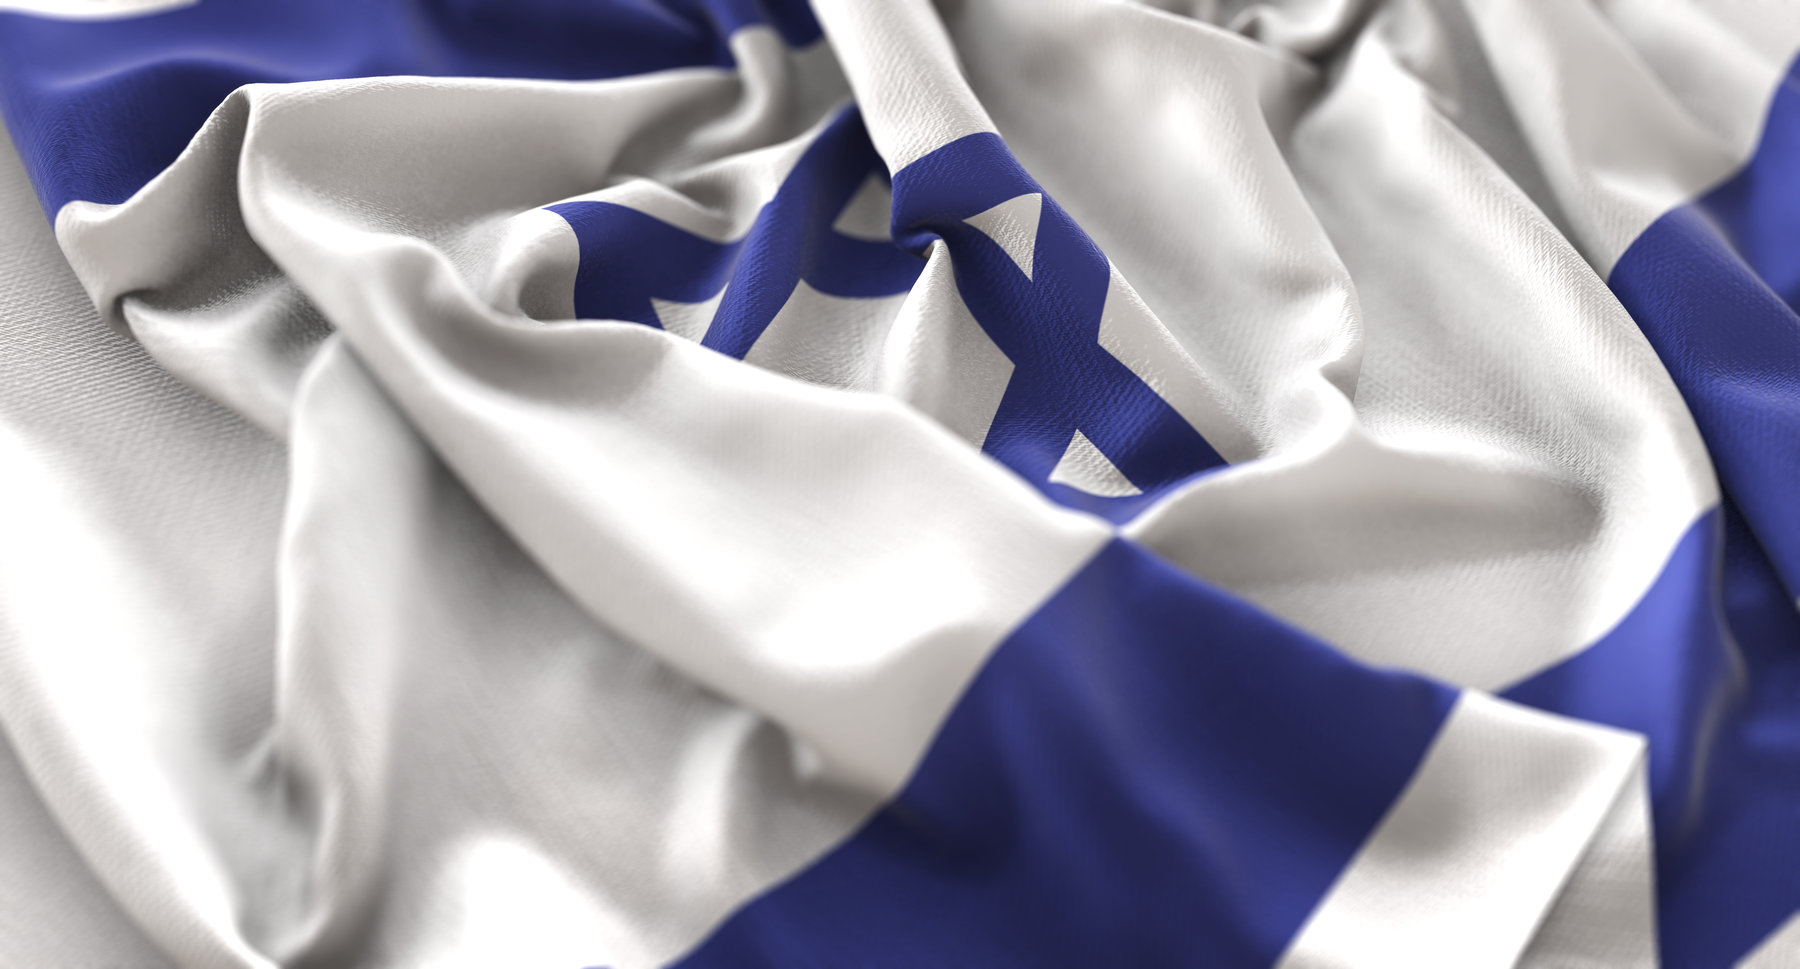 Israel Flag Ruffled Beautifully Waving Macro Close-Up Shot